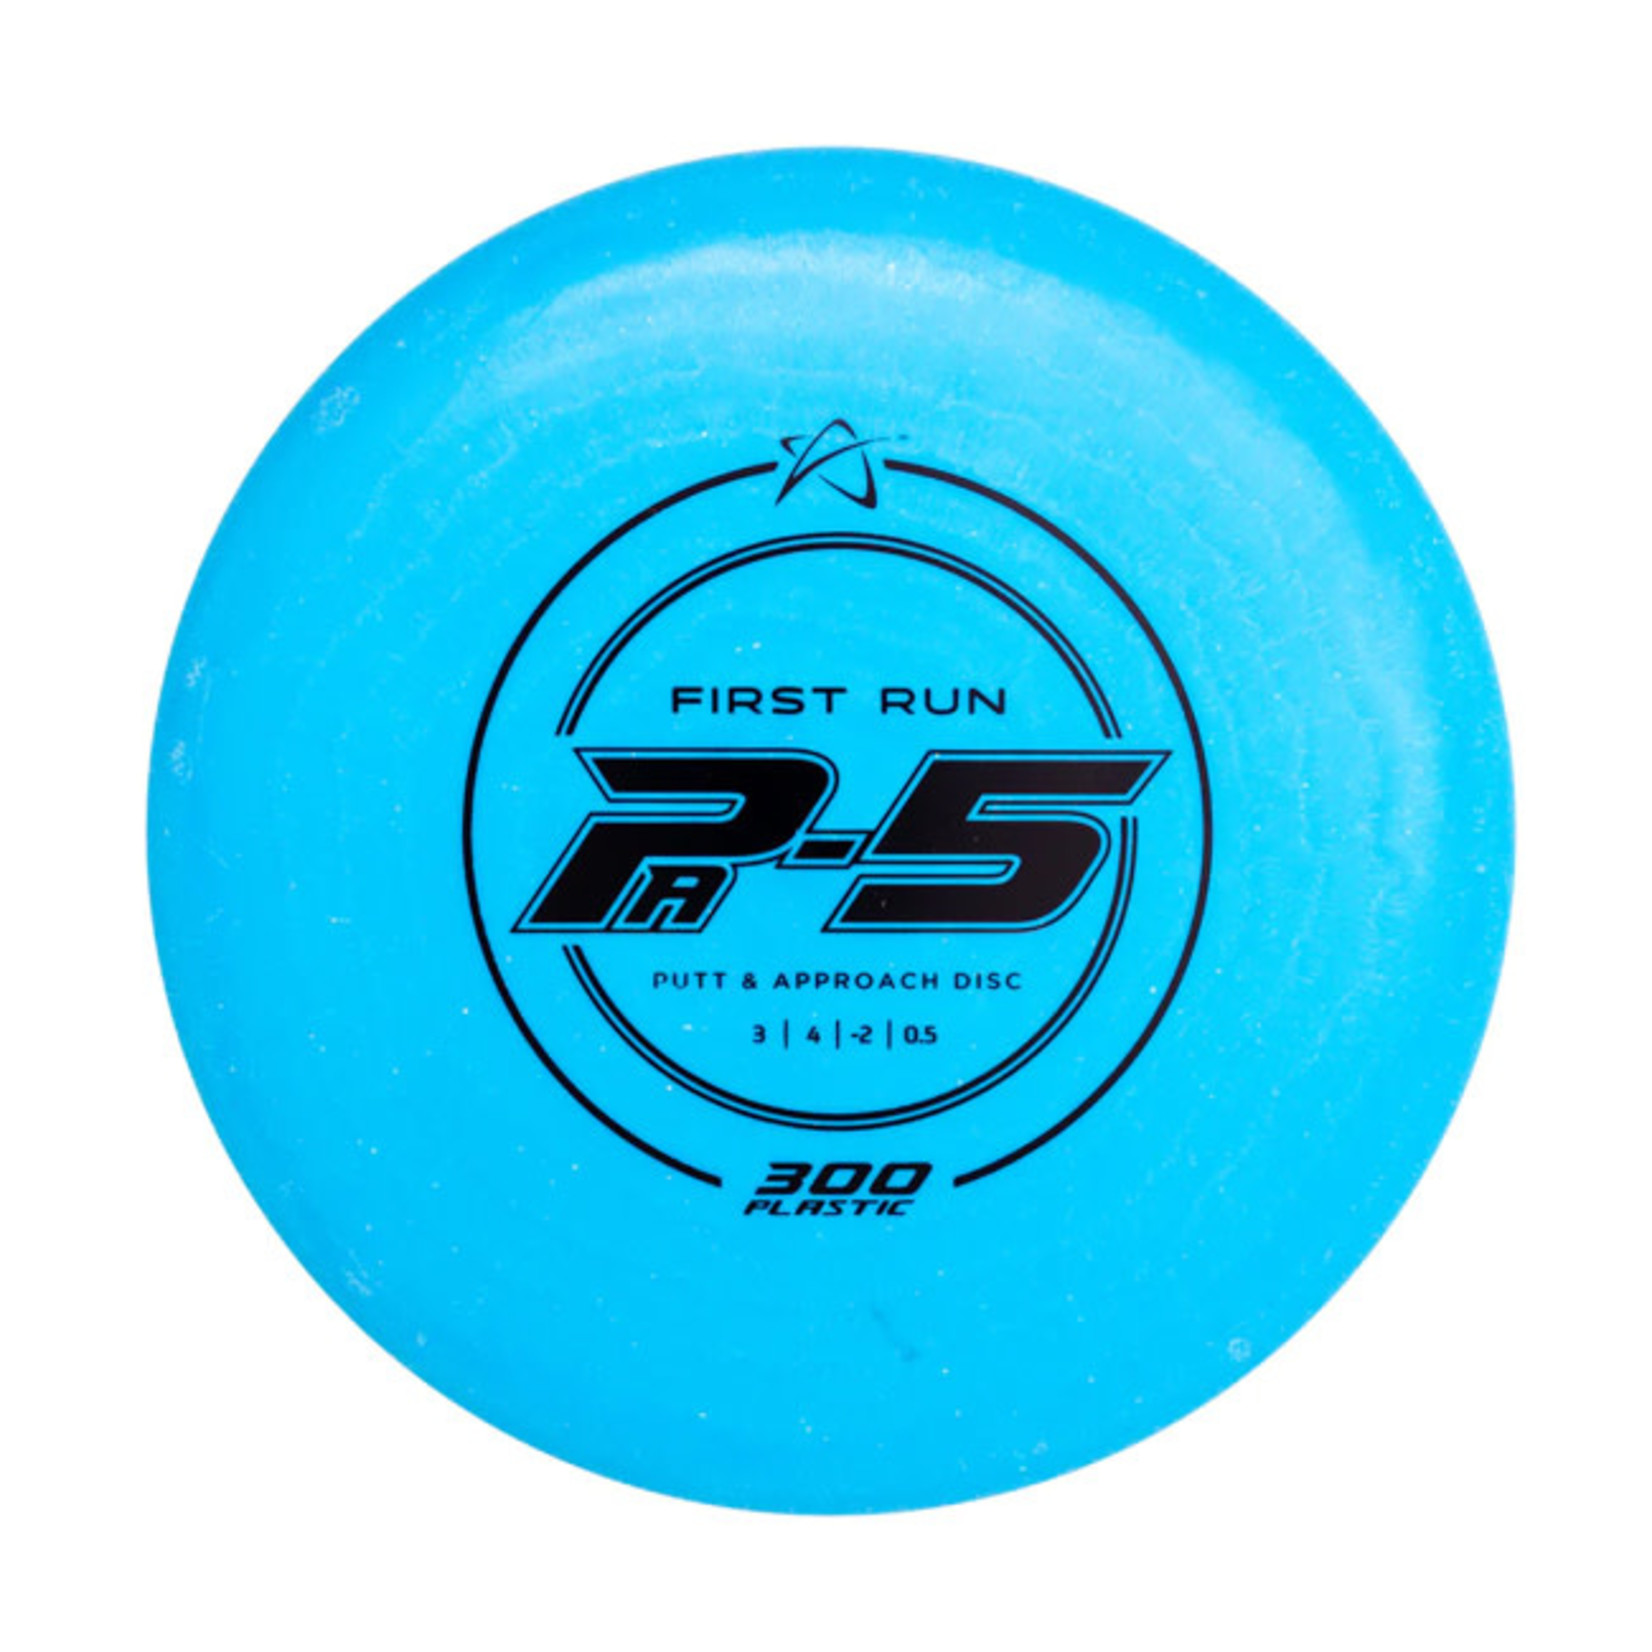 Prodigy Prodigy PA-5 Putt & Approach Disc "First Run" Stamp